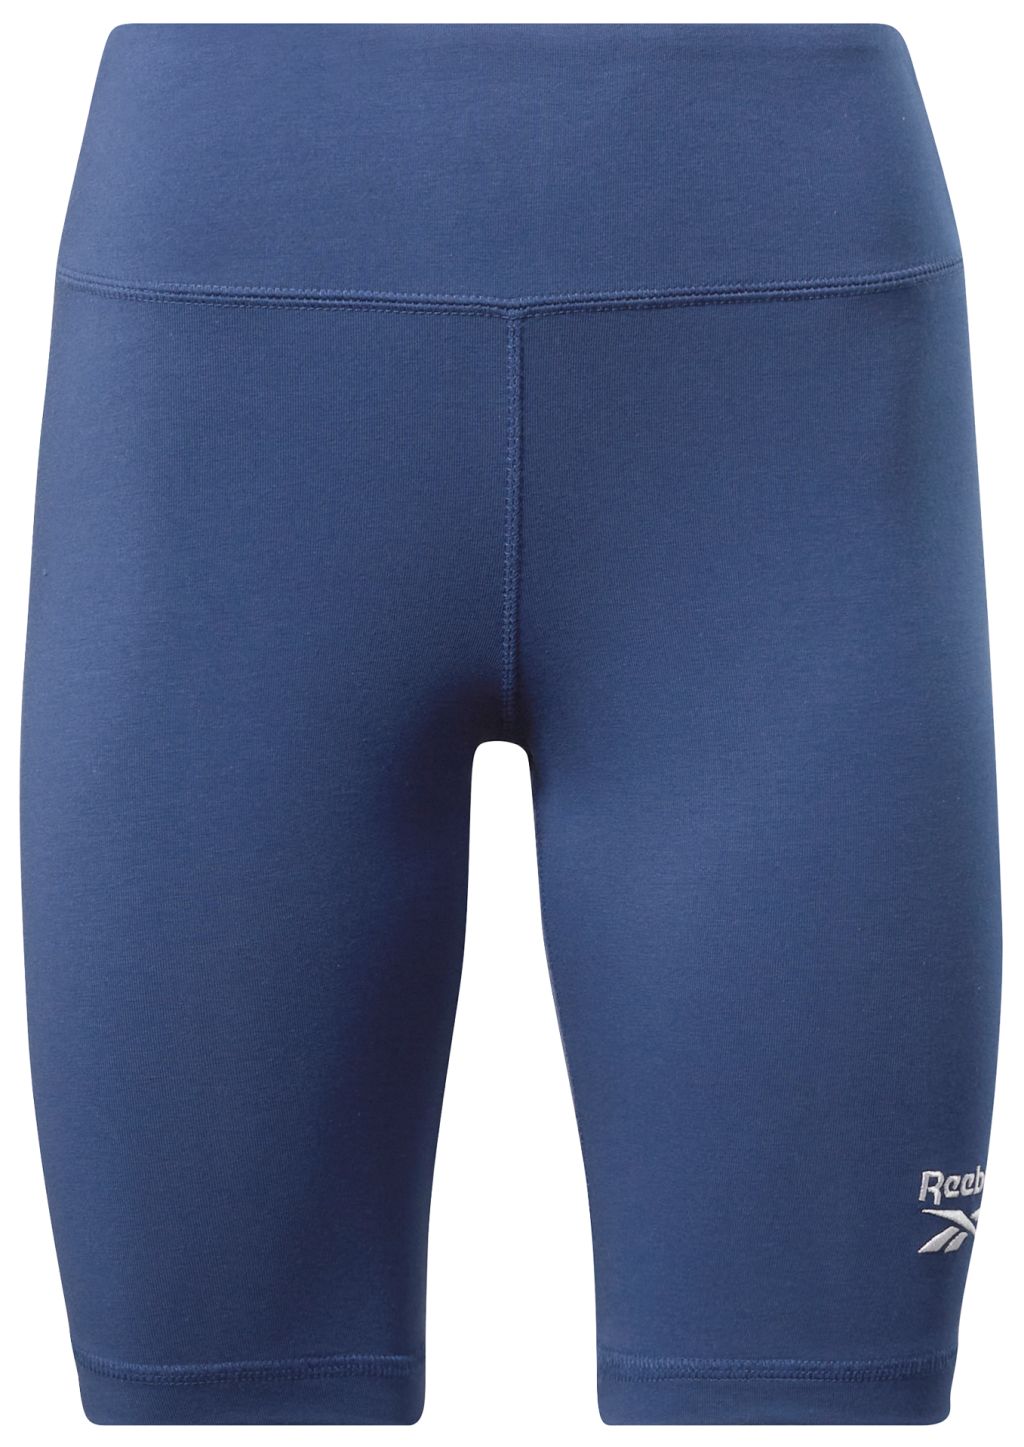 Women\'s shorts Reebok RI SL Fitted Short - batik blue | Tennis Zone |  Tennis Shop | Sportshorts